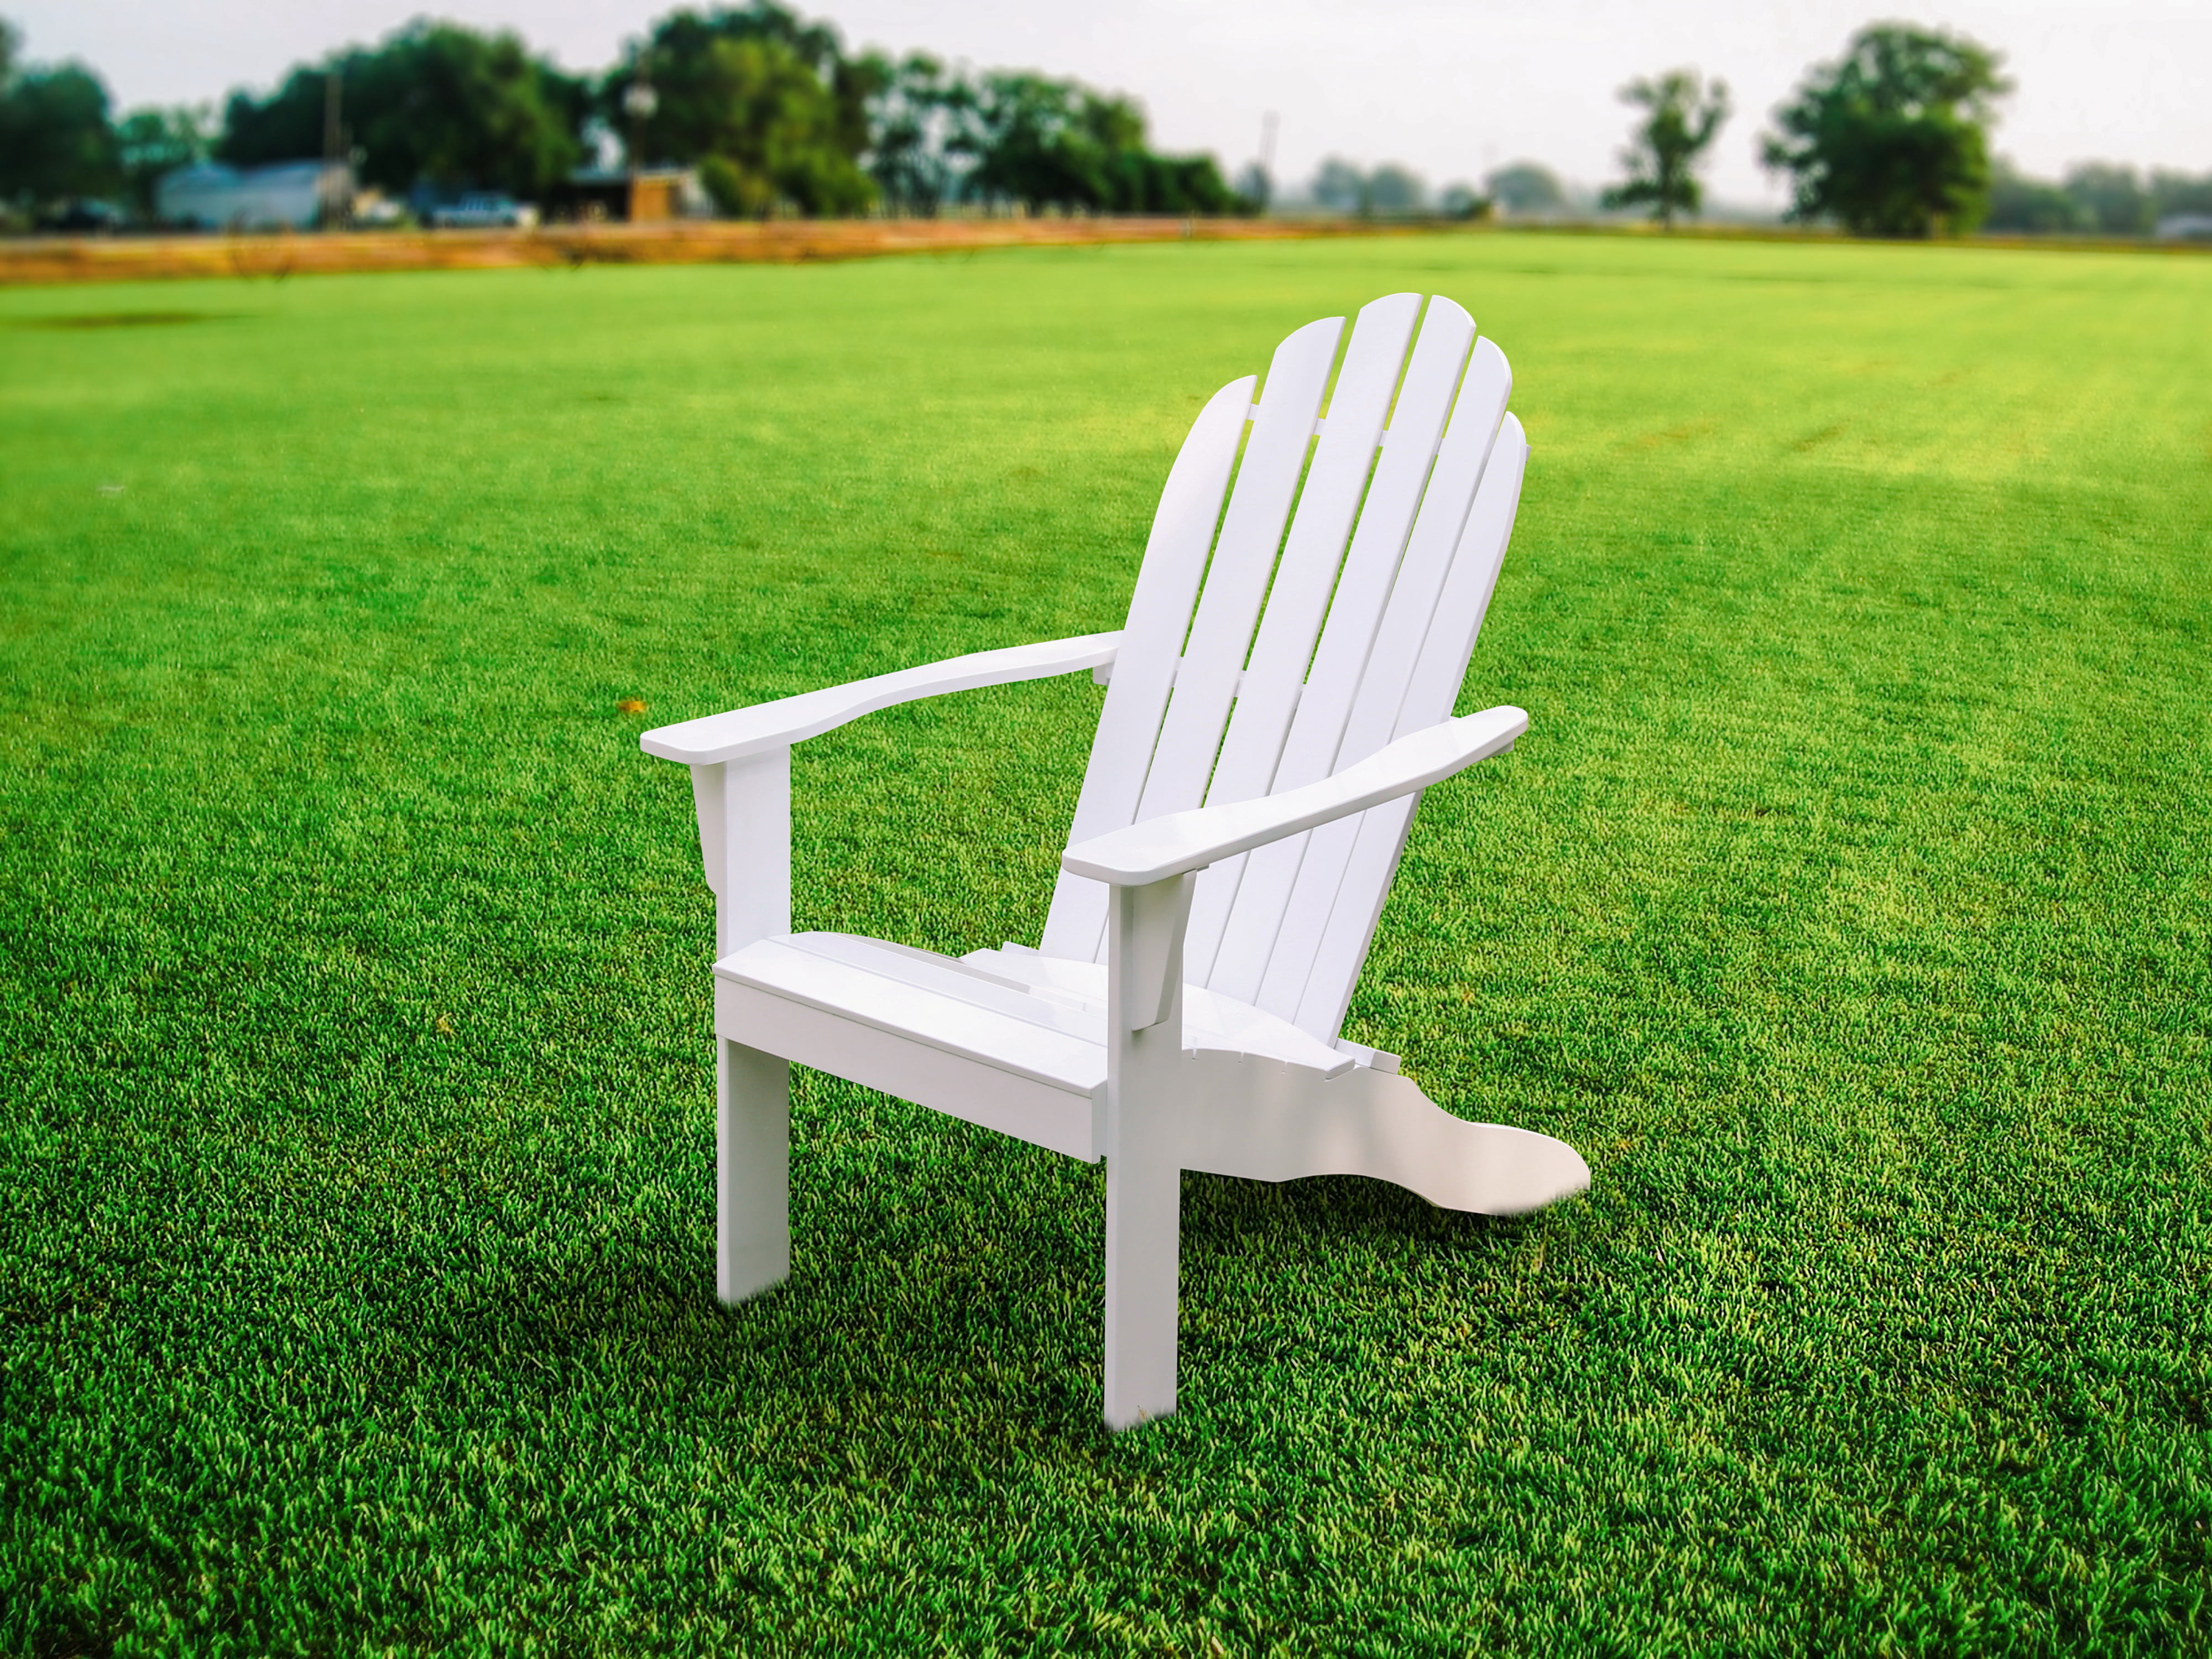 Mainstays Wood Outdoor Adirondack Chair, White - Walmart.com